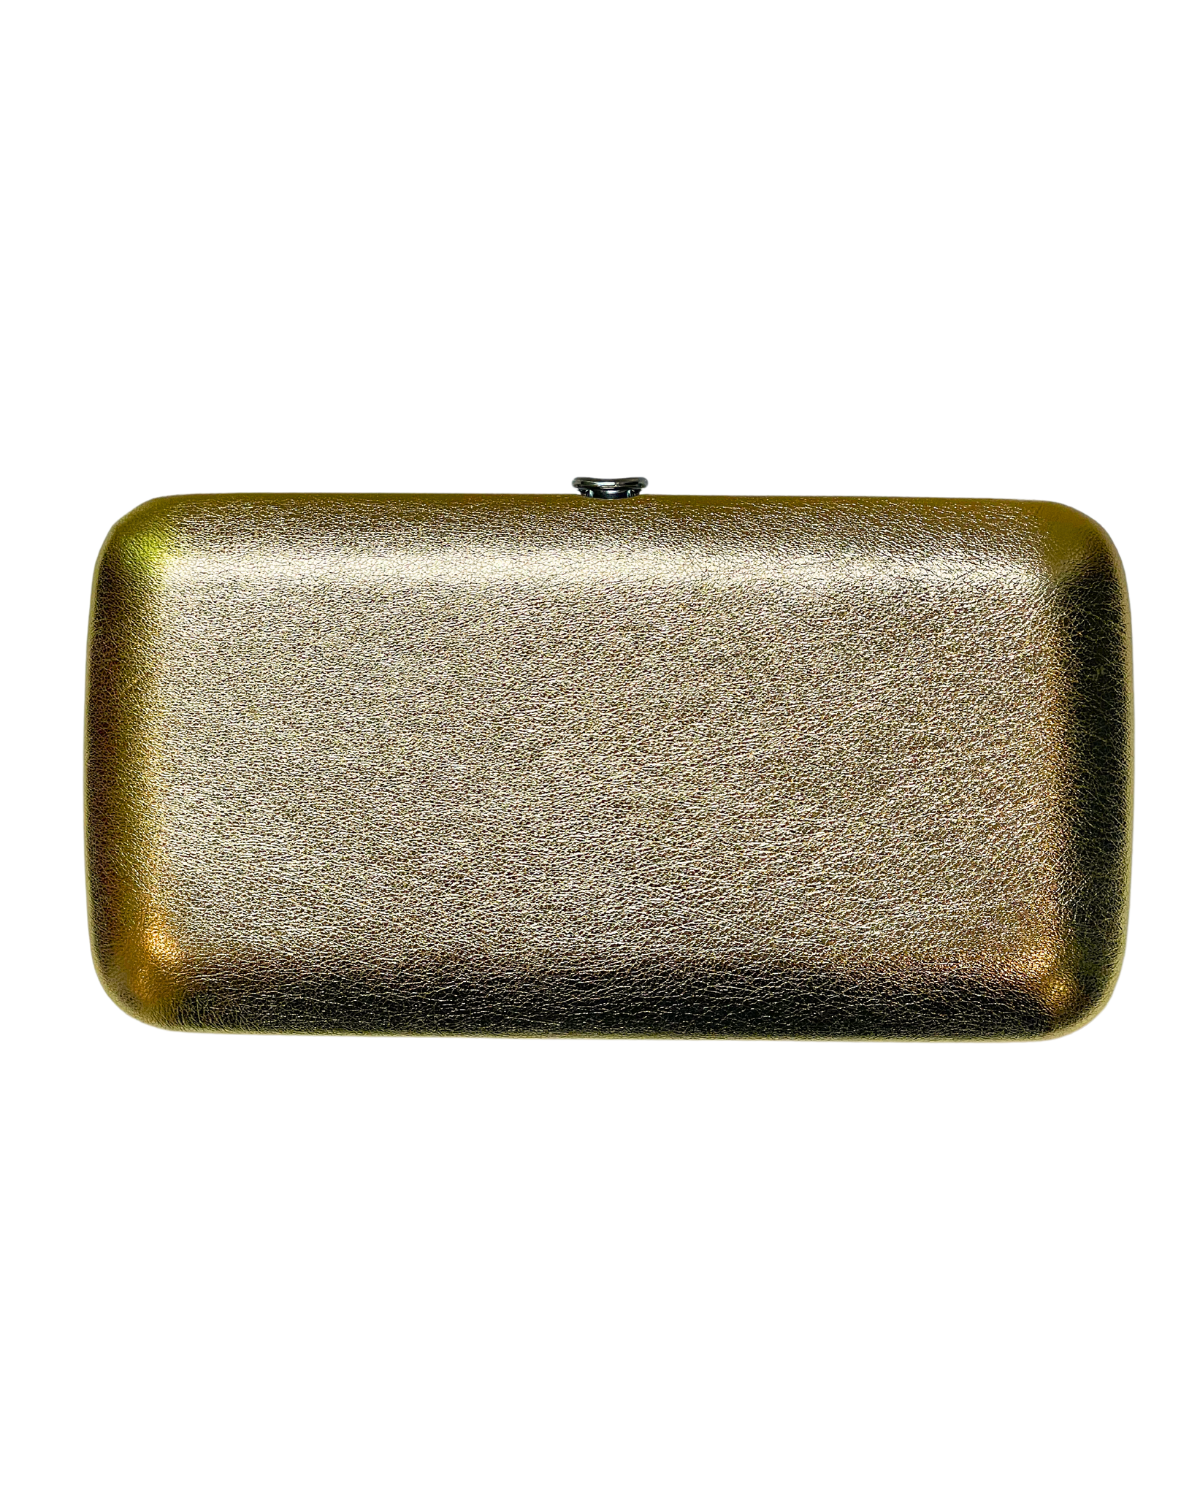 Finley Clutch (Gold Metallic Leather Chrome)